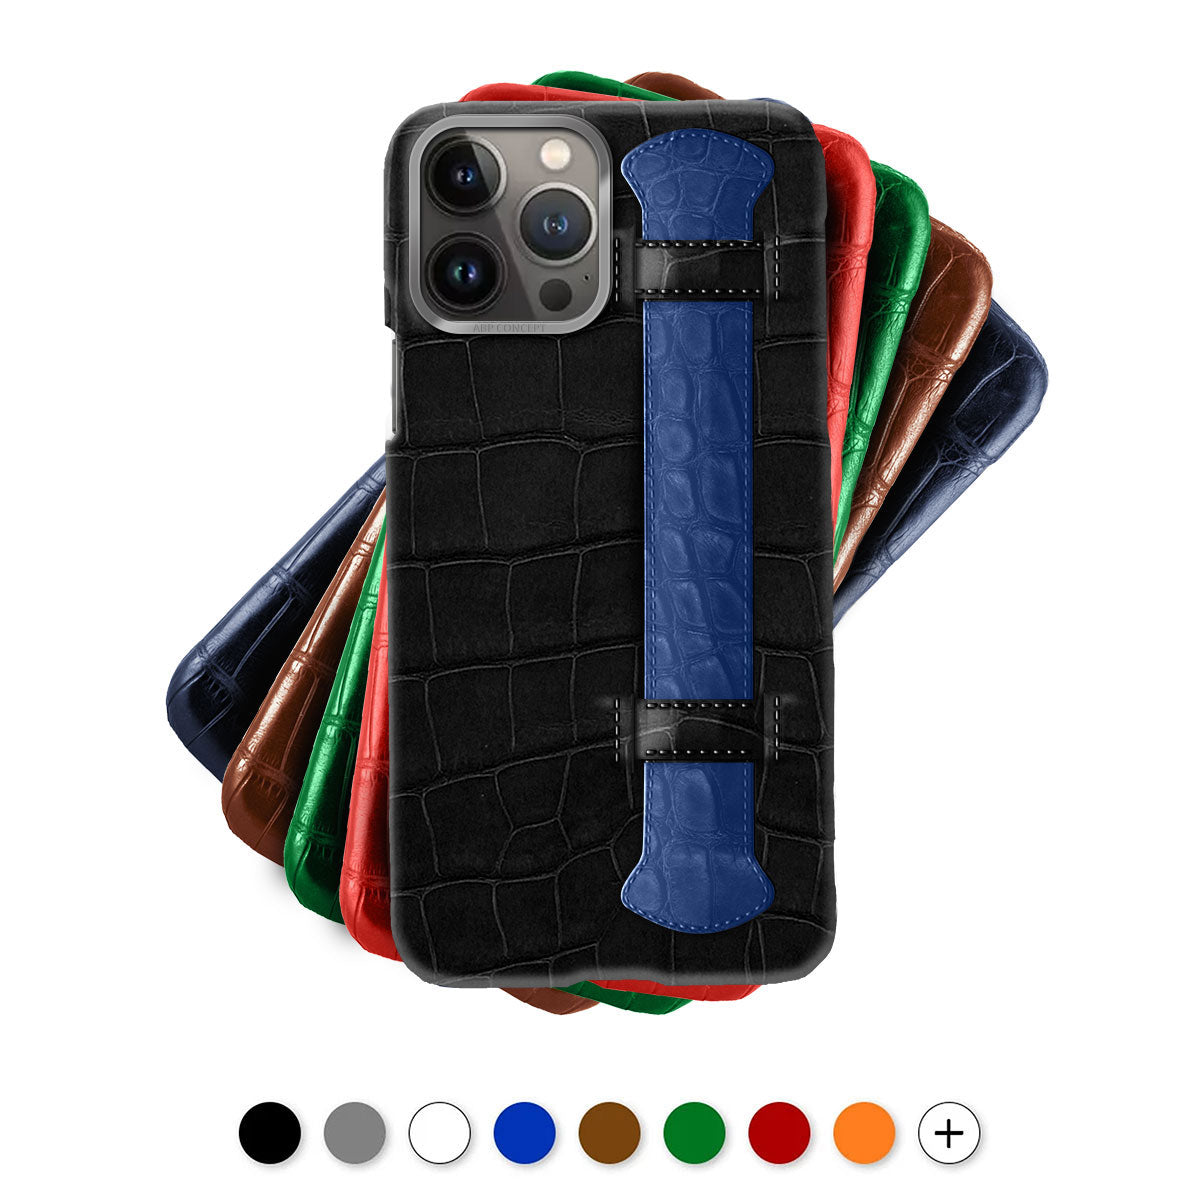 Leather iPhone "Strap case" / cover - iPhone 13 ( Pro / Max / Mini ) - Genuine alligator